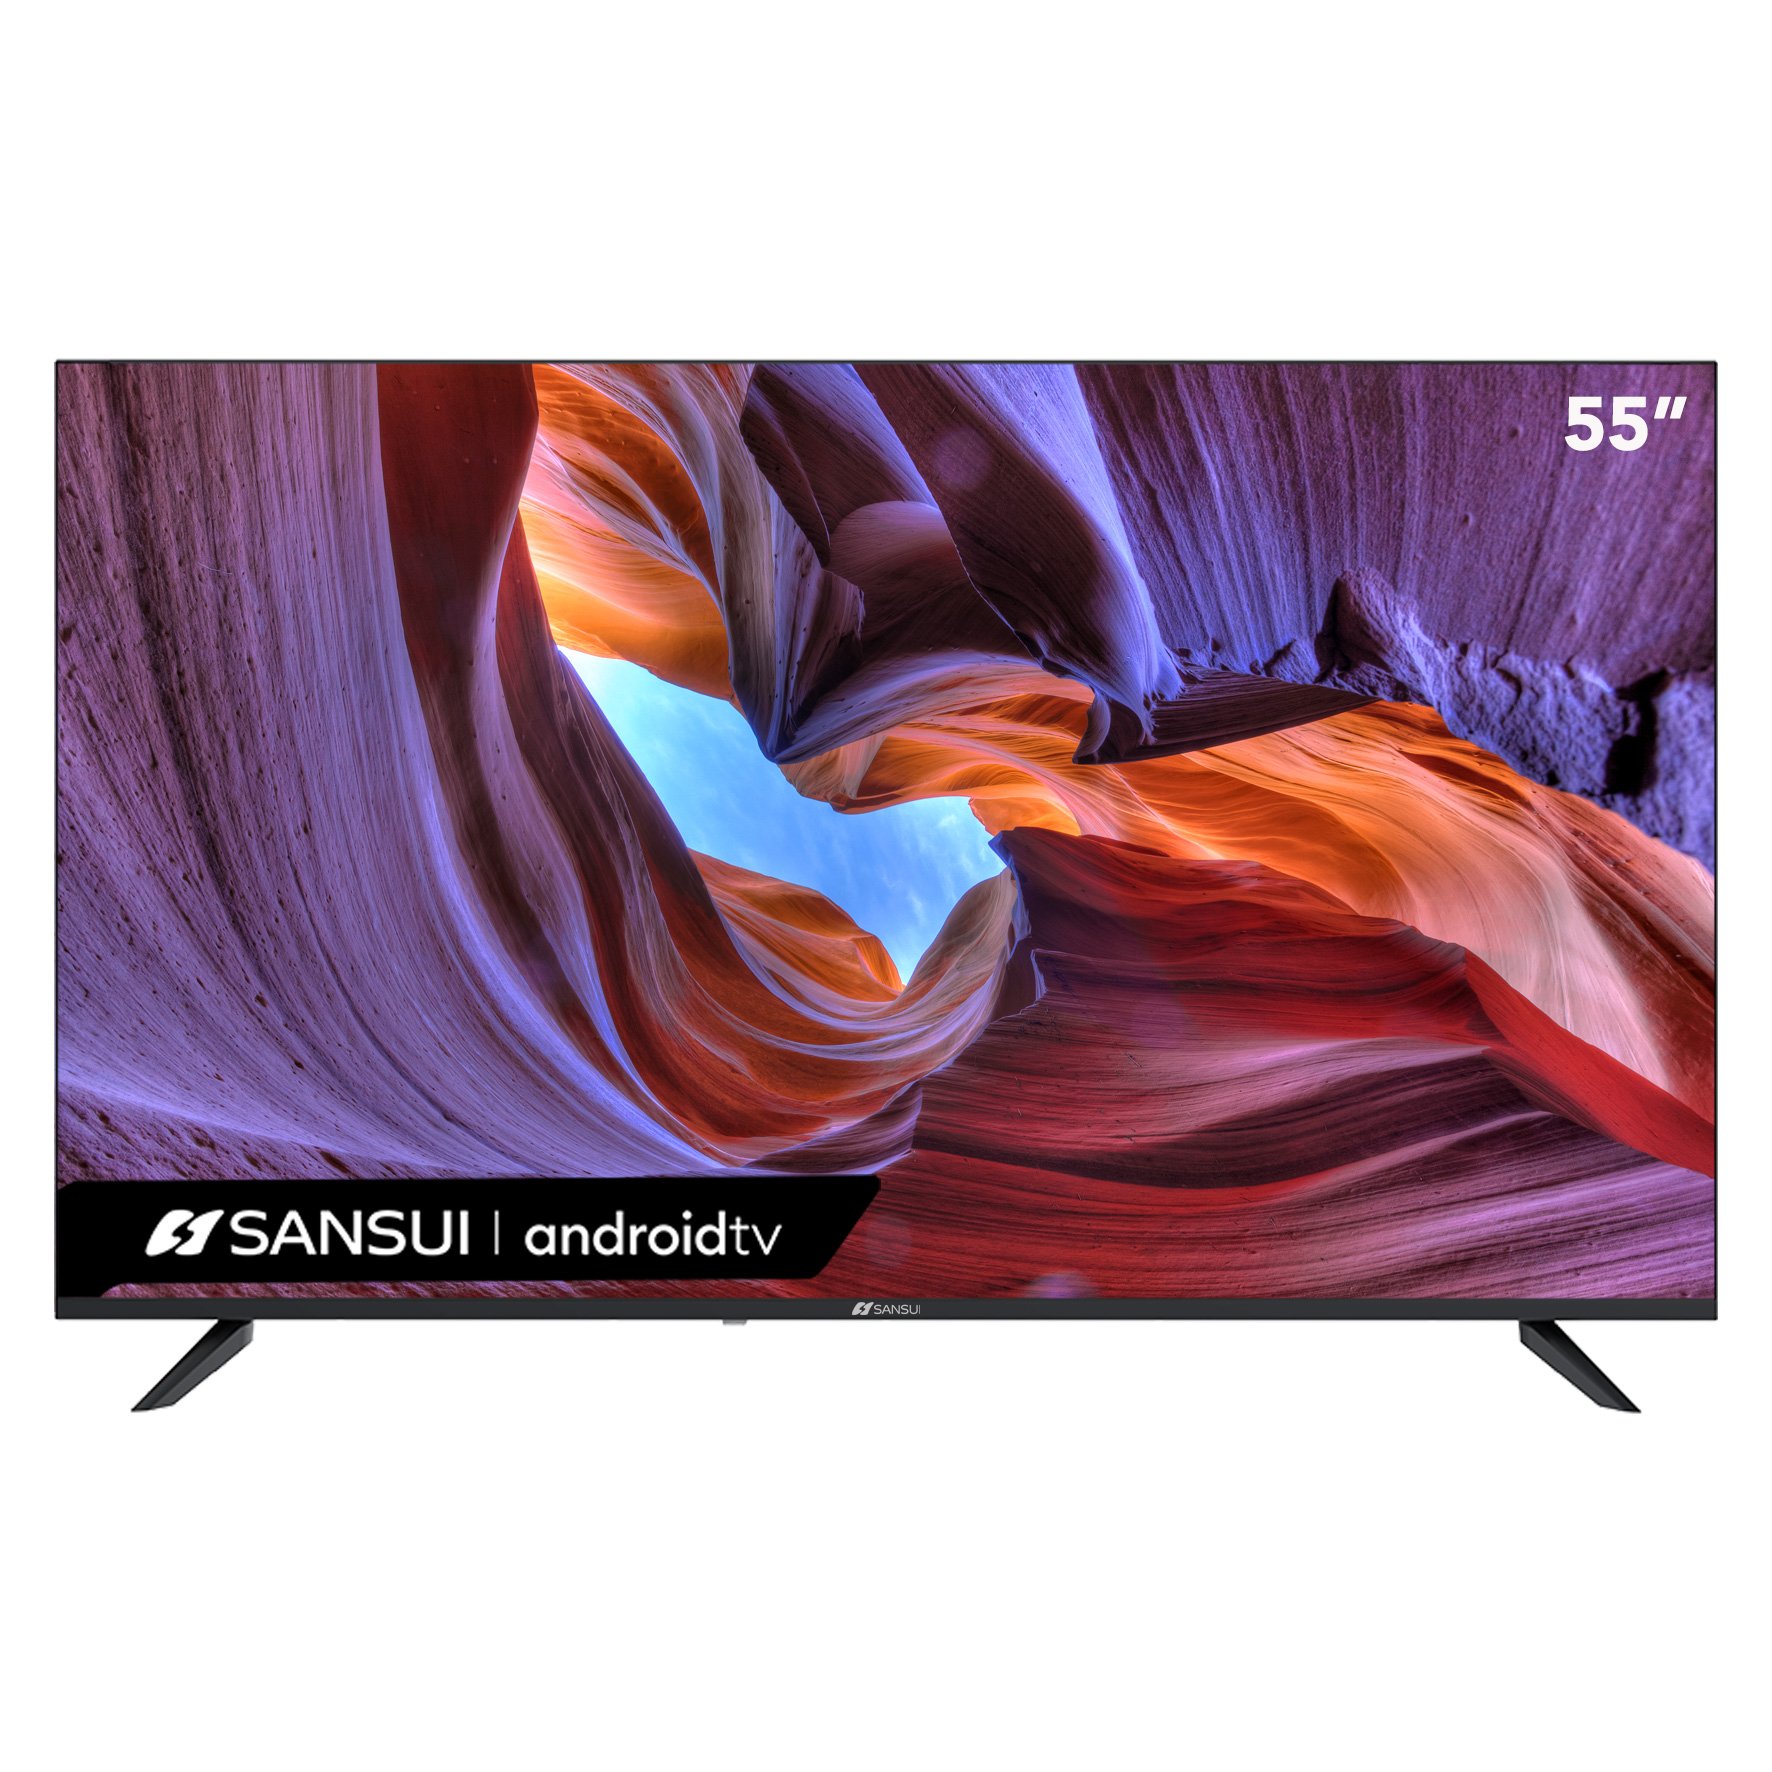 Pantalla SANSUI 55" Android TV 4K, UHD, Smart, SMX55V1UA